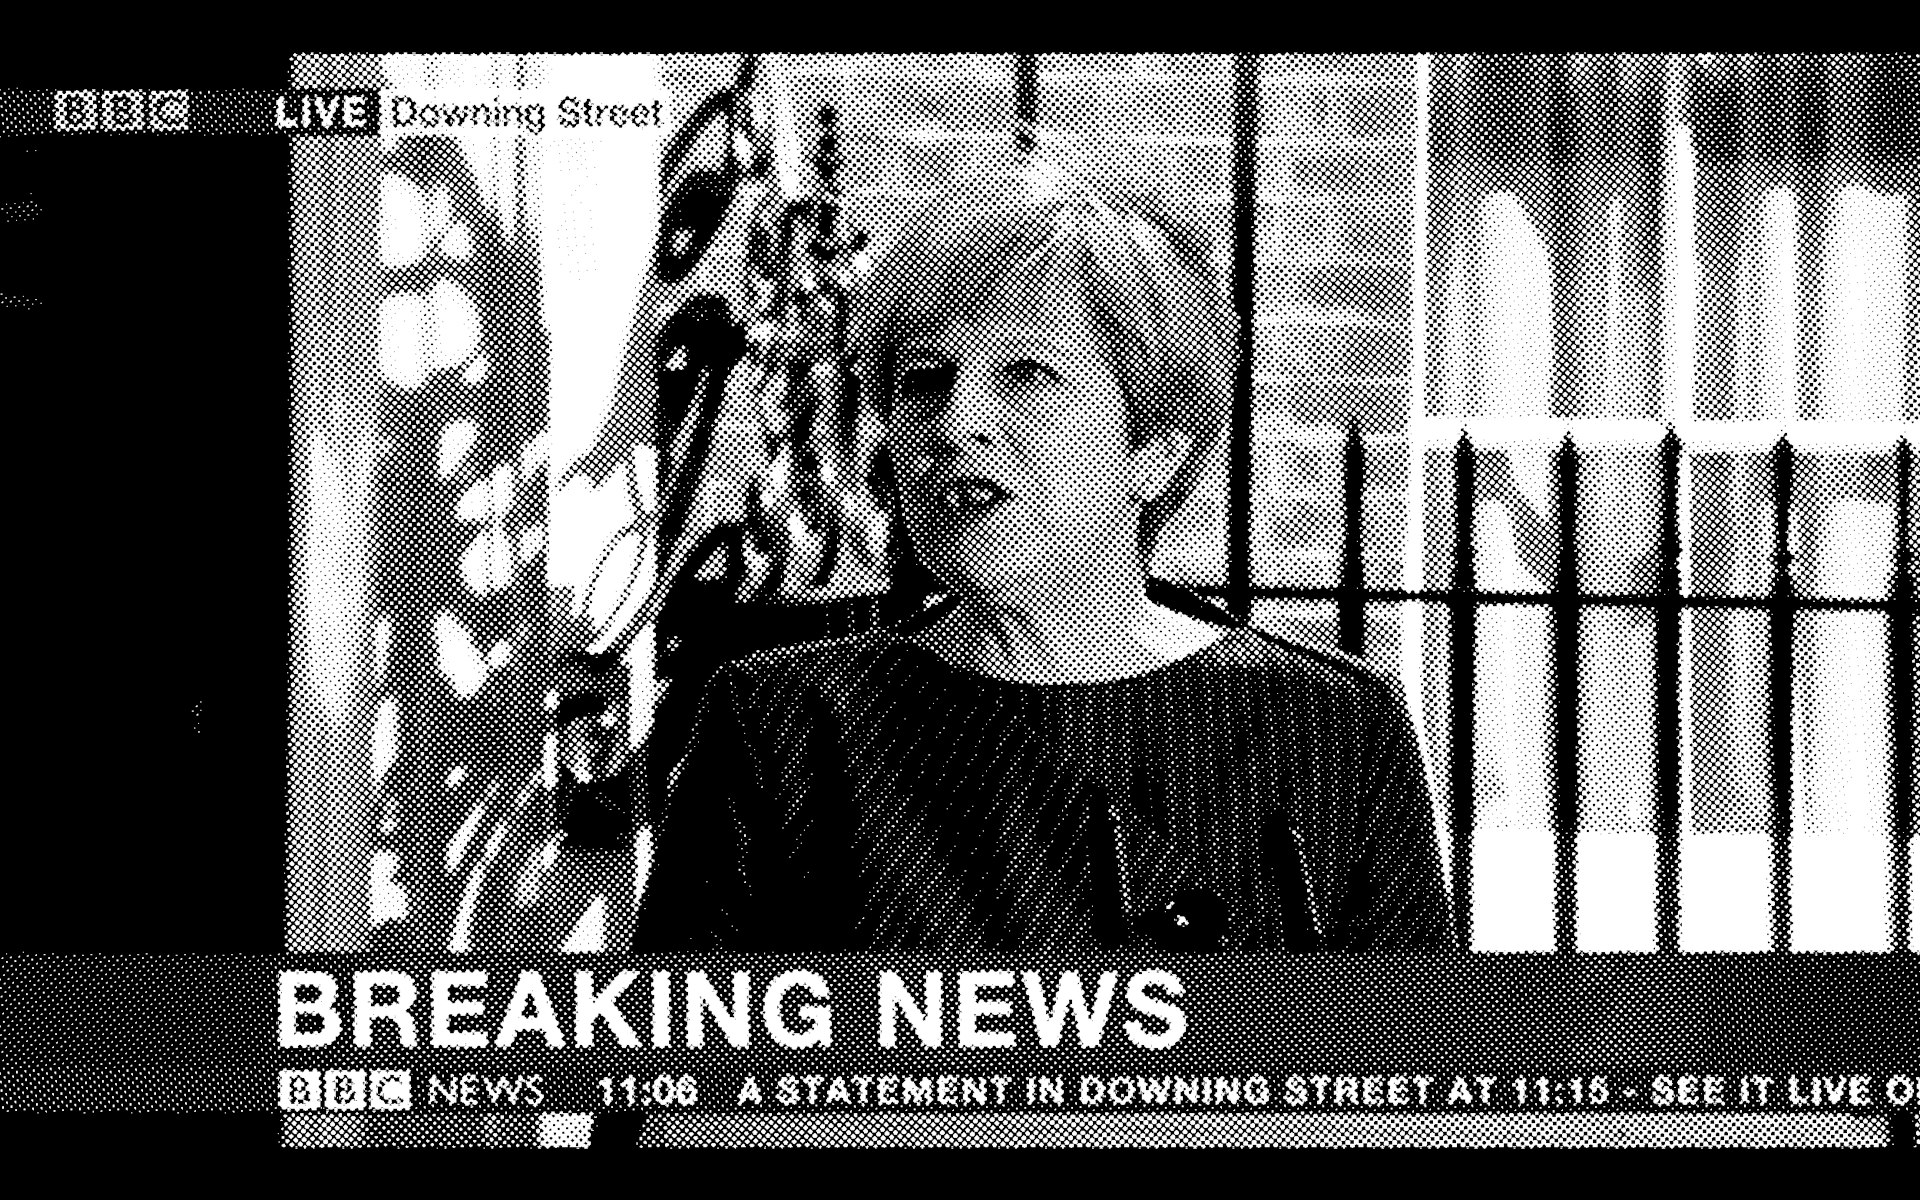 Theresa May has just called a UK general election